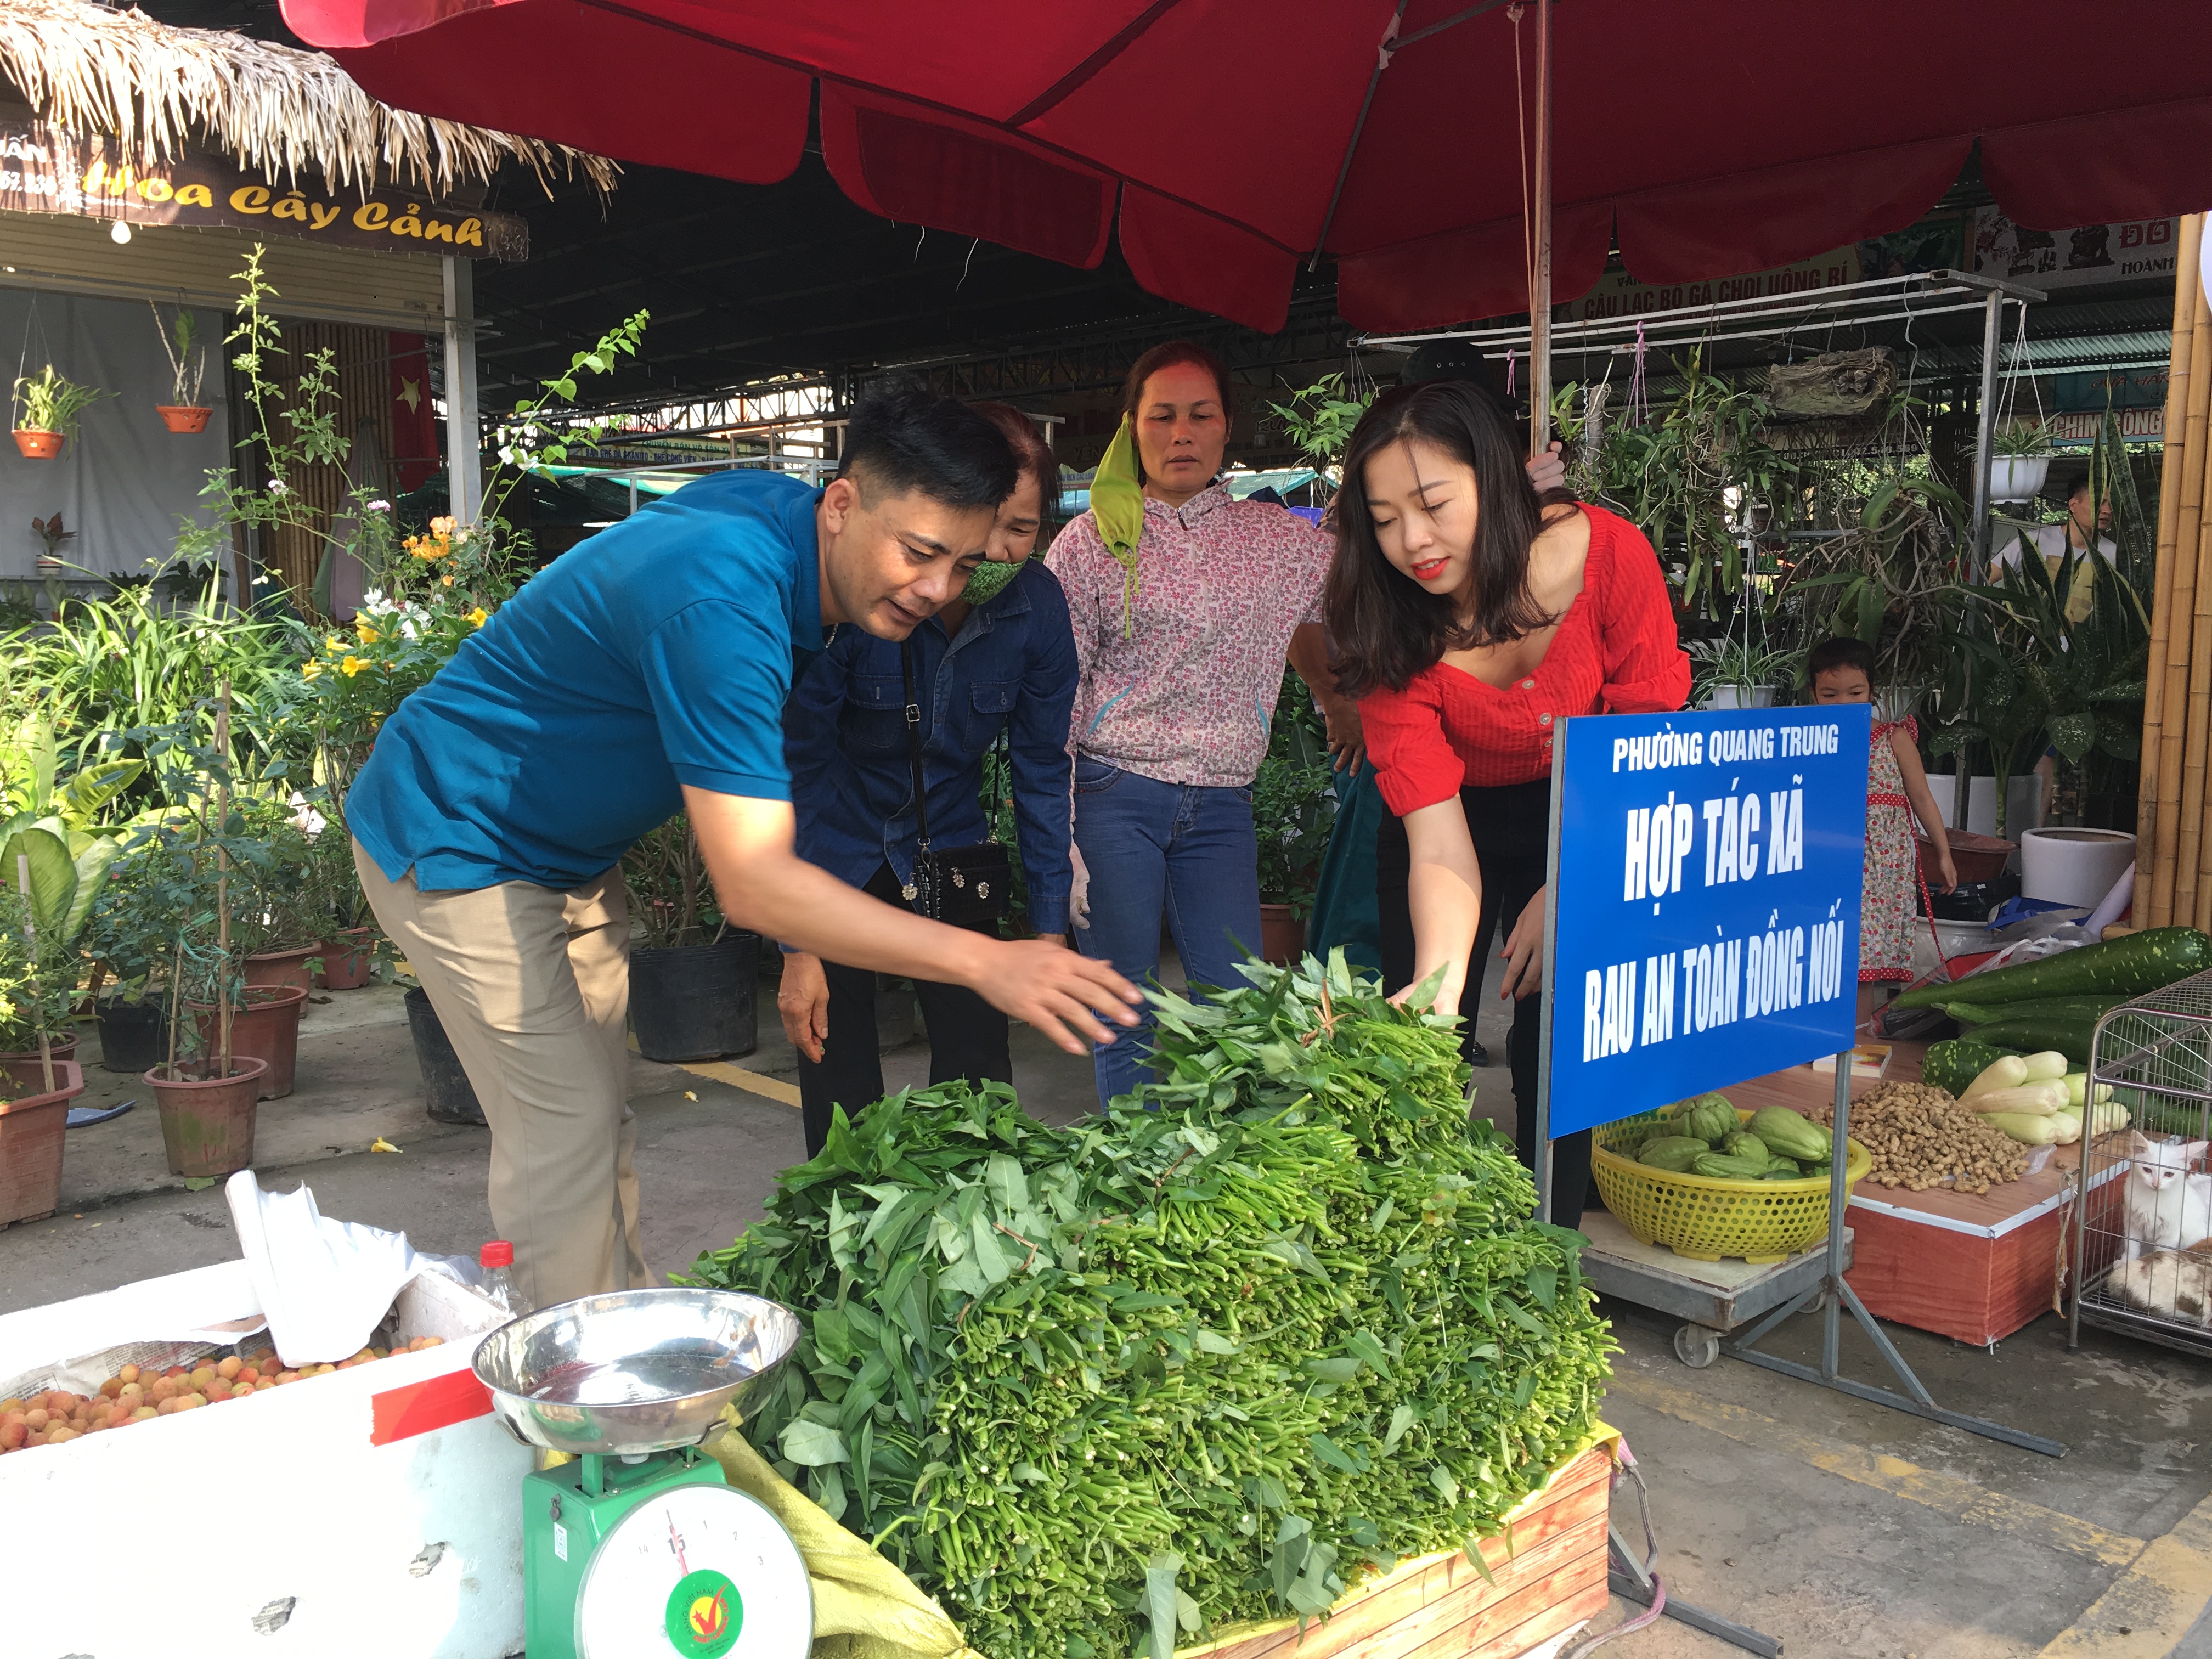 Bustling Canh Uong Bi market last week